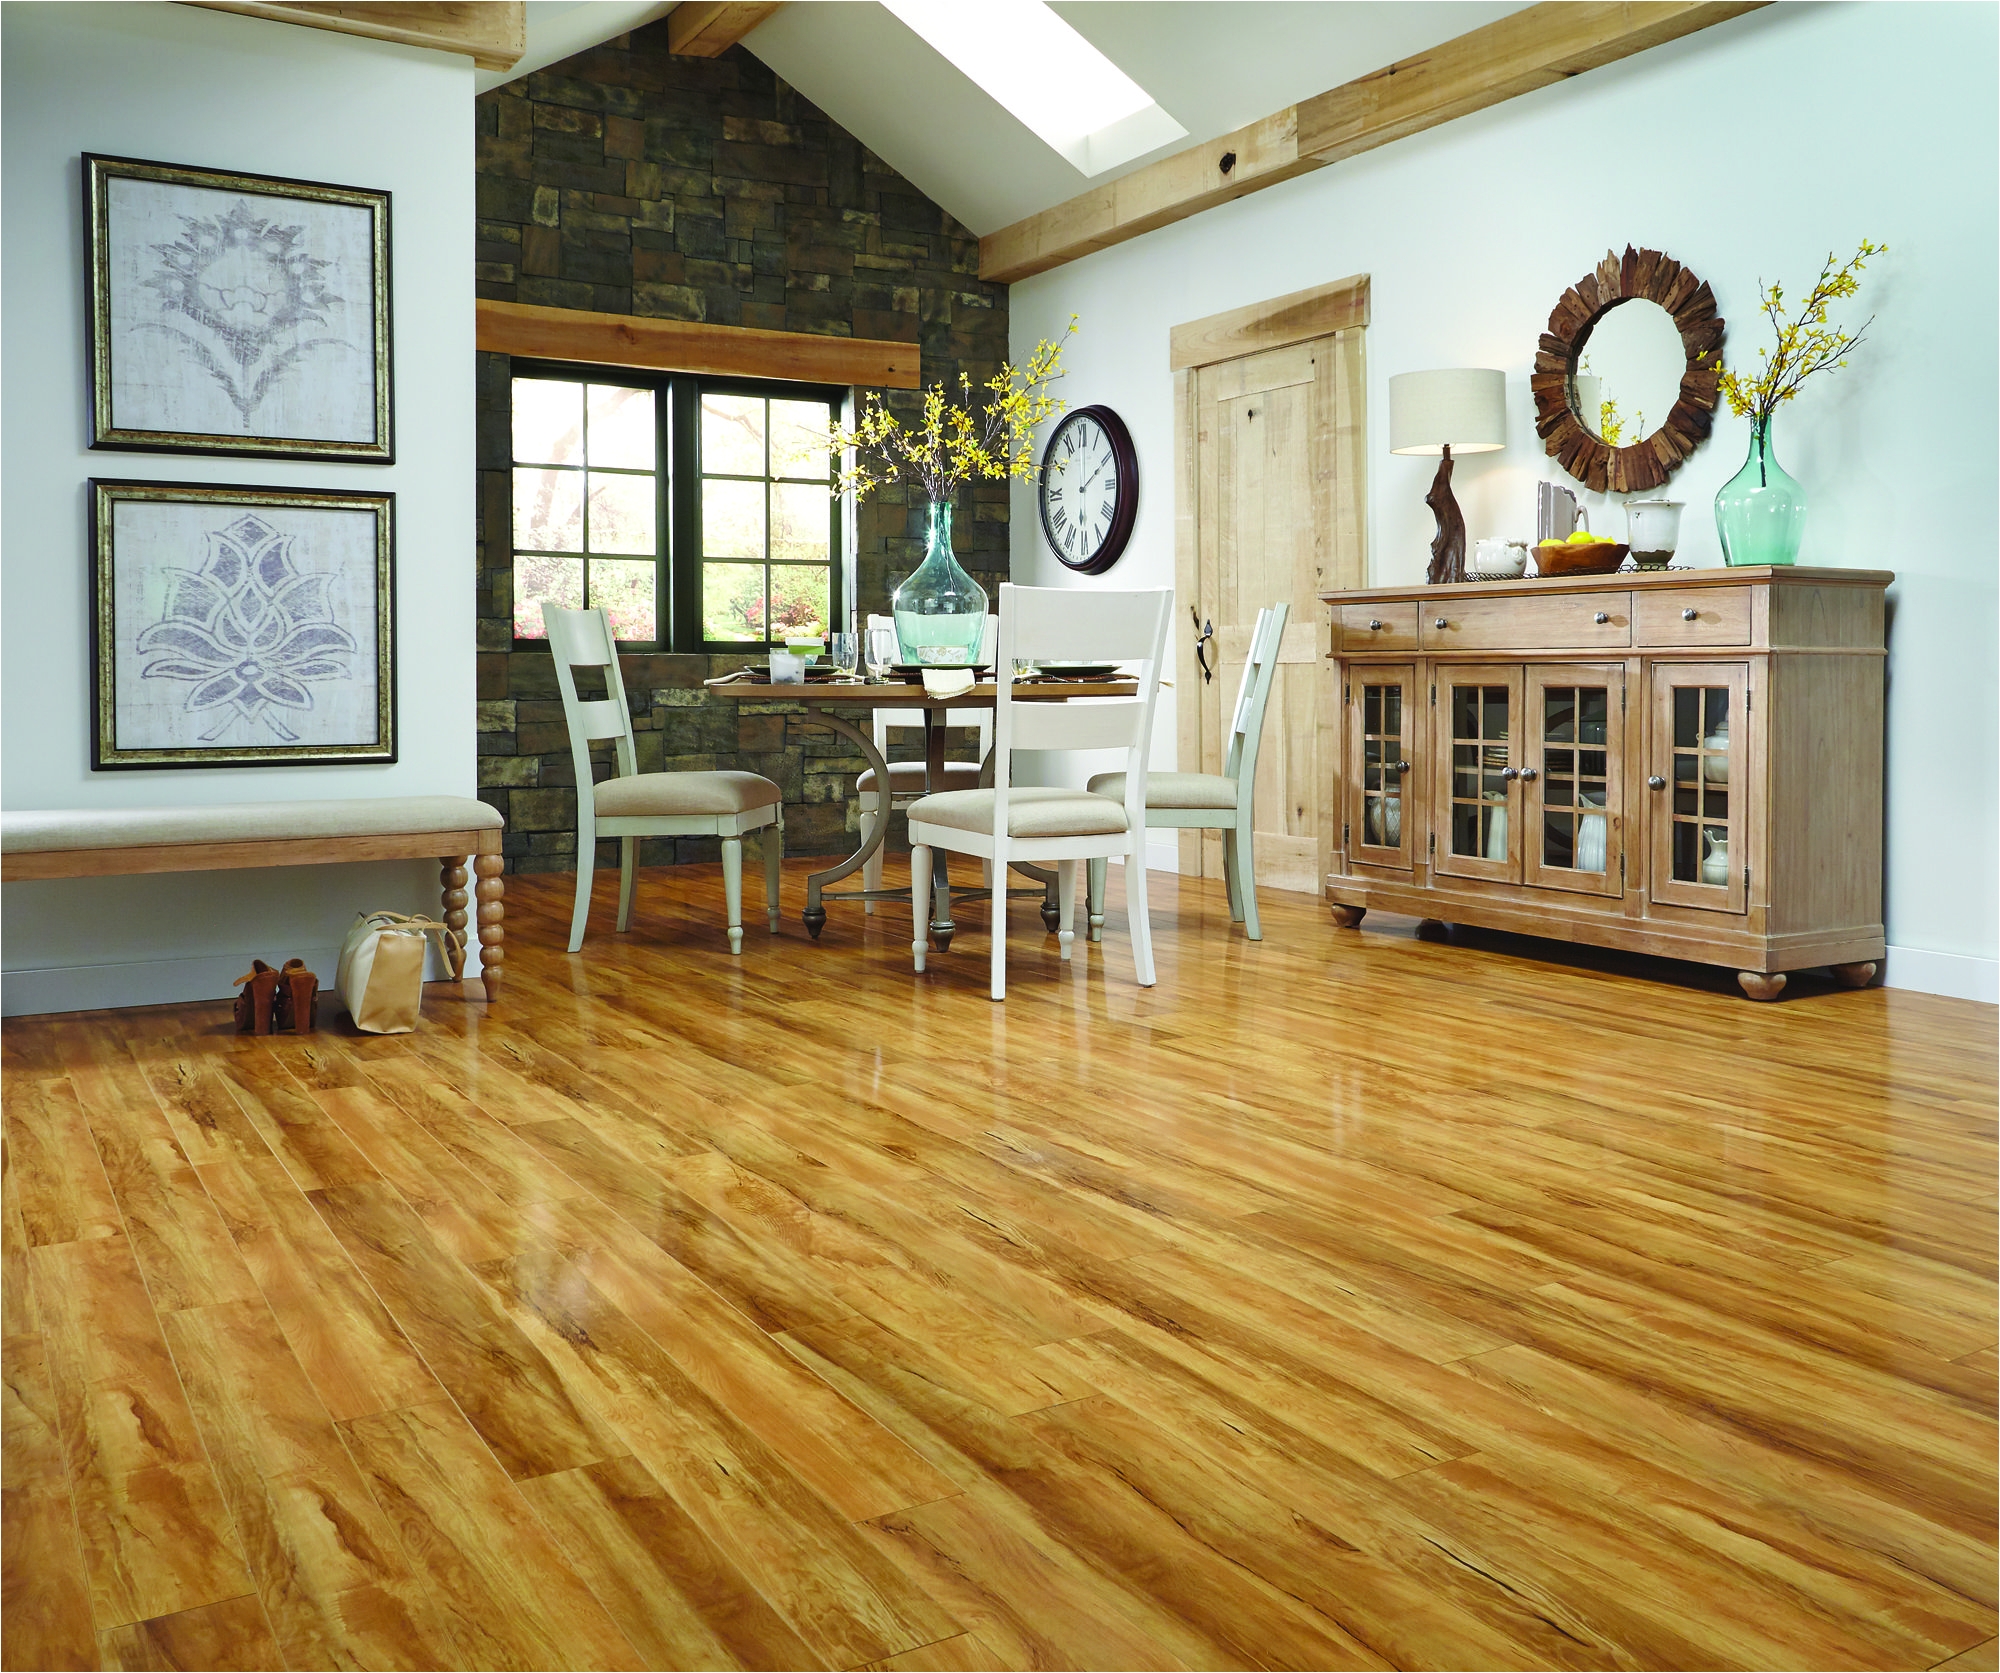 Laminate Flooring Stores Jacksonville Fl Americas Mission Olive Kitchen Ideas Pinterest Lumber